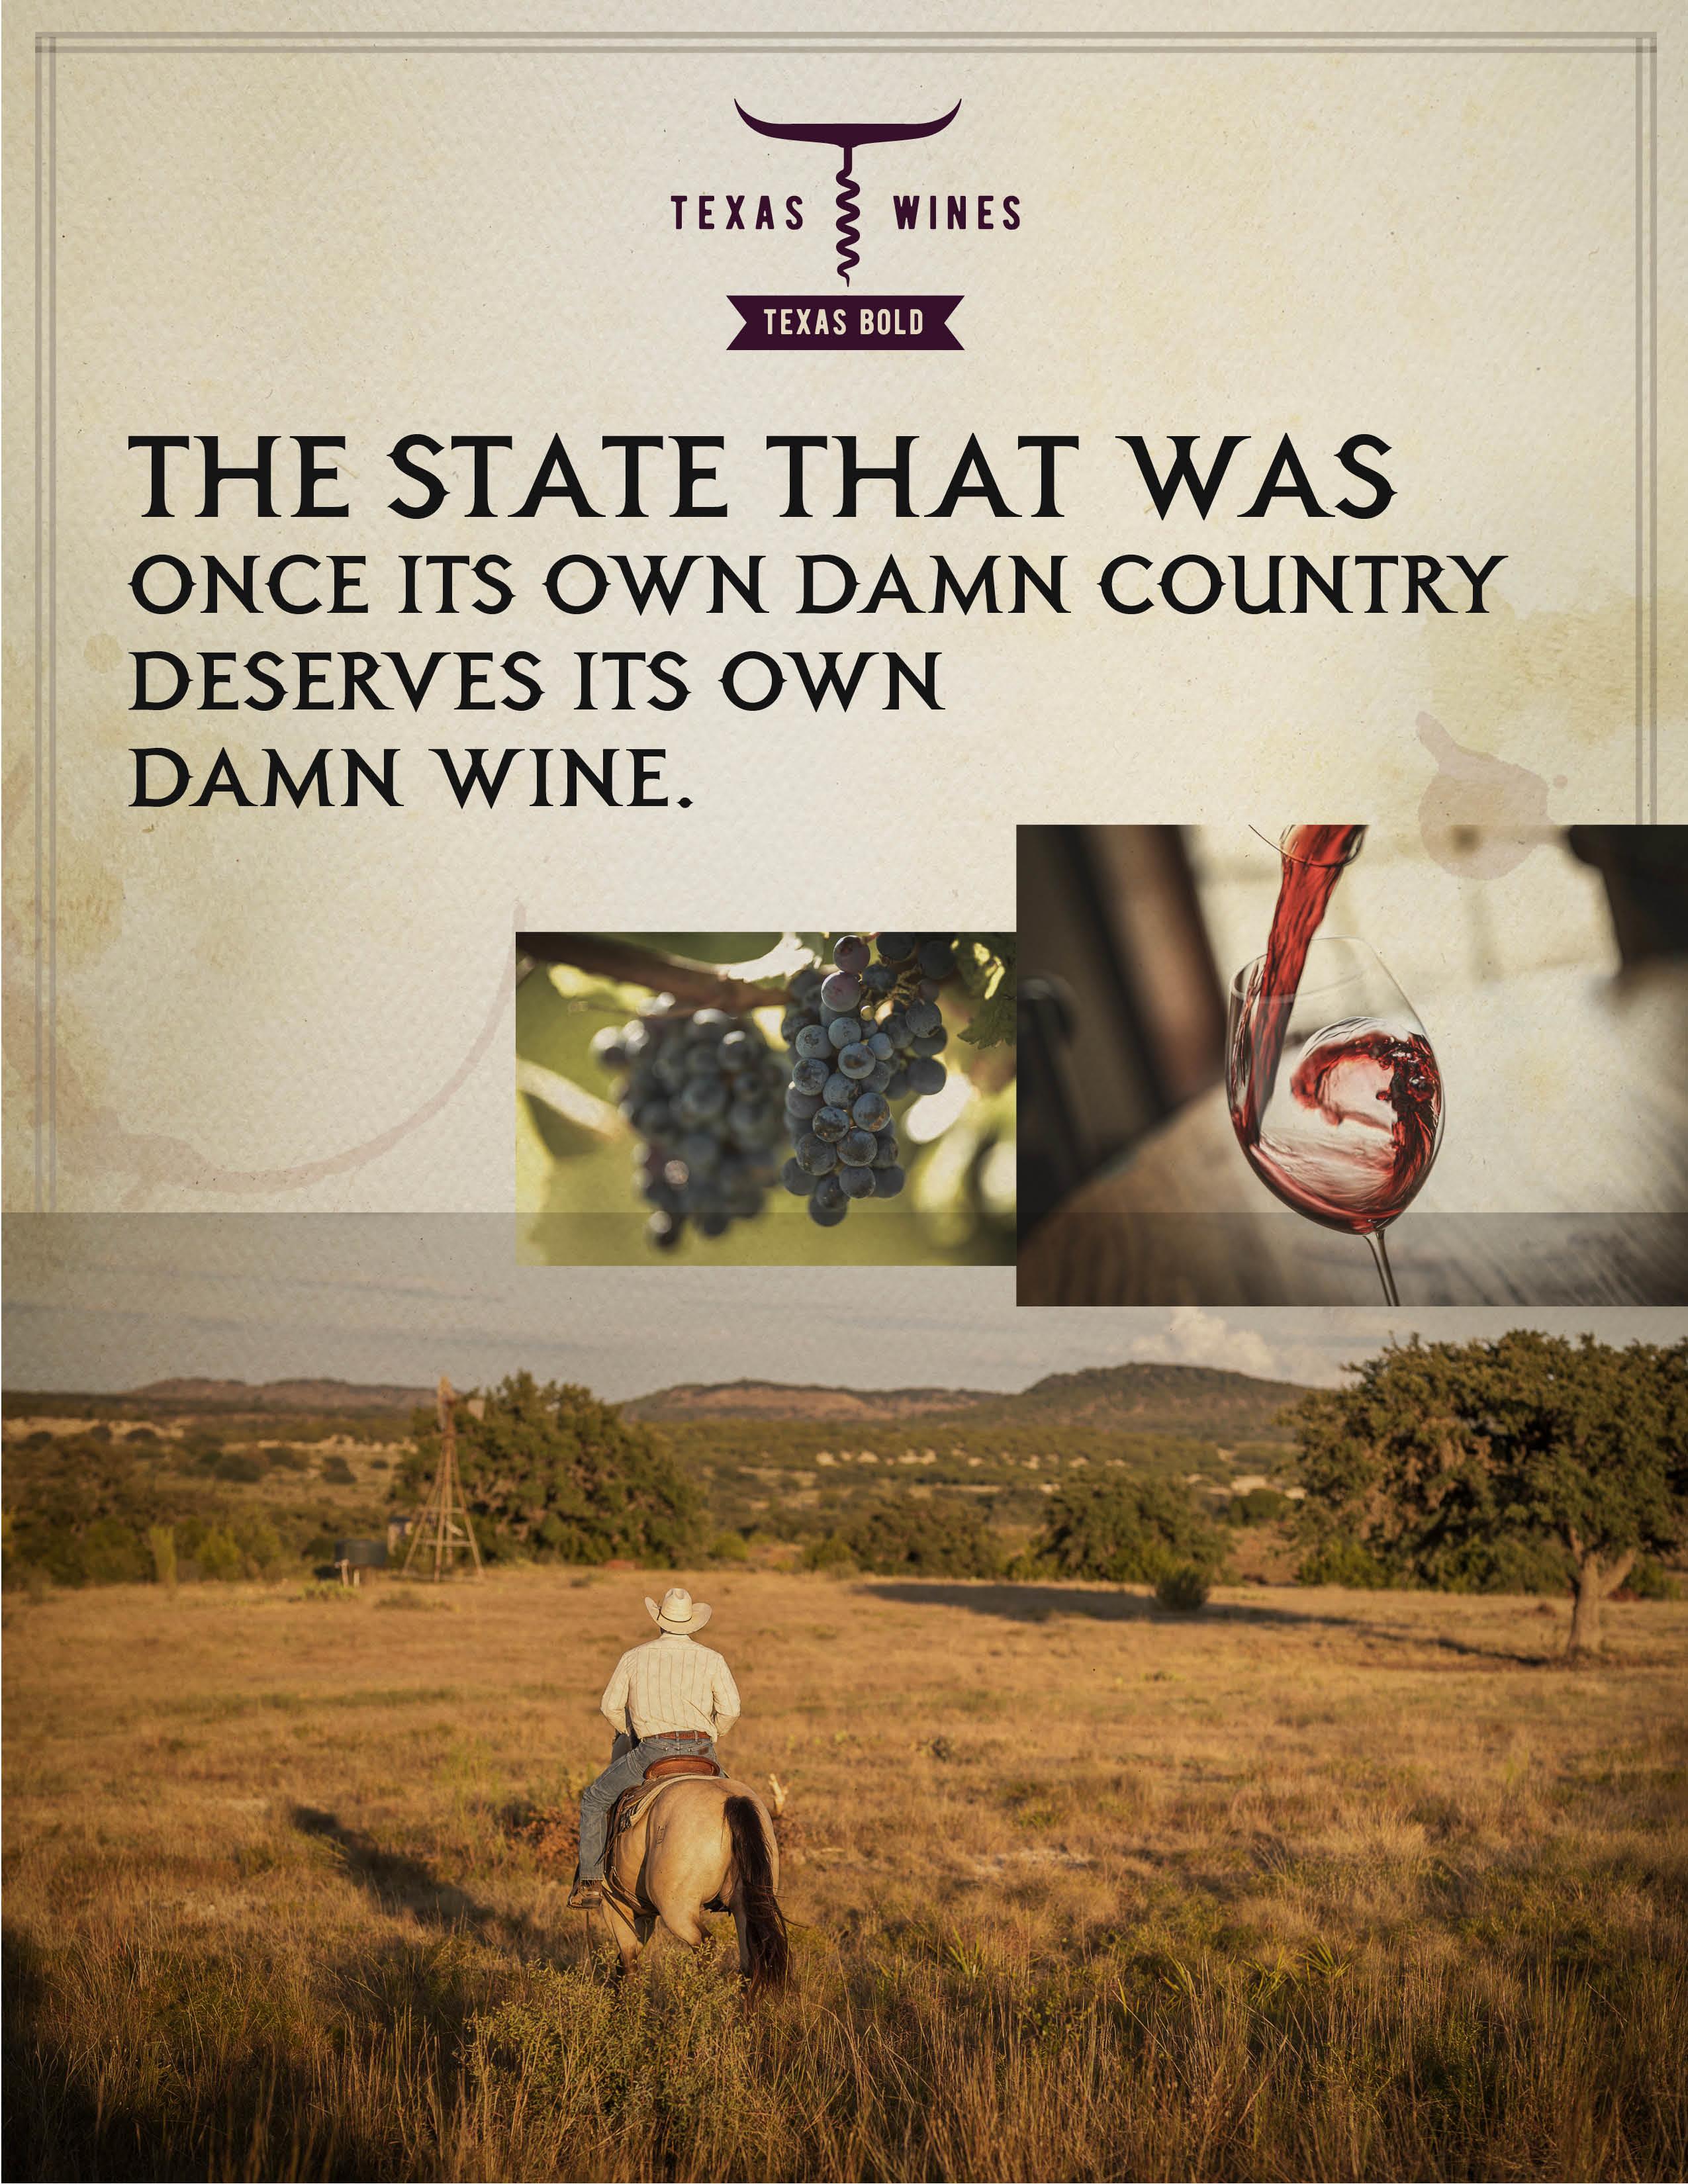 Texas Wines - Damn Wine